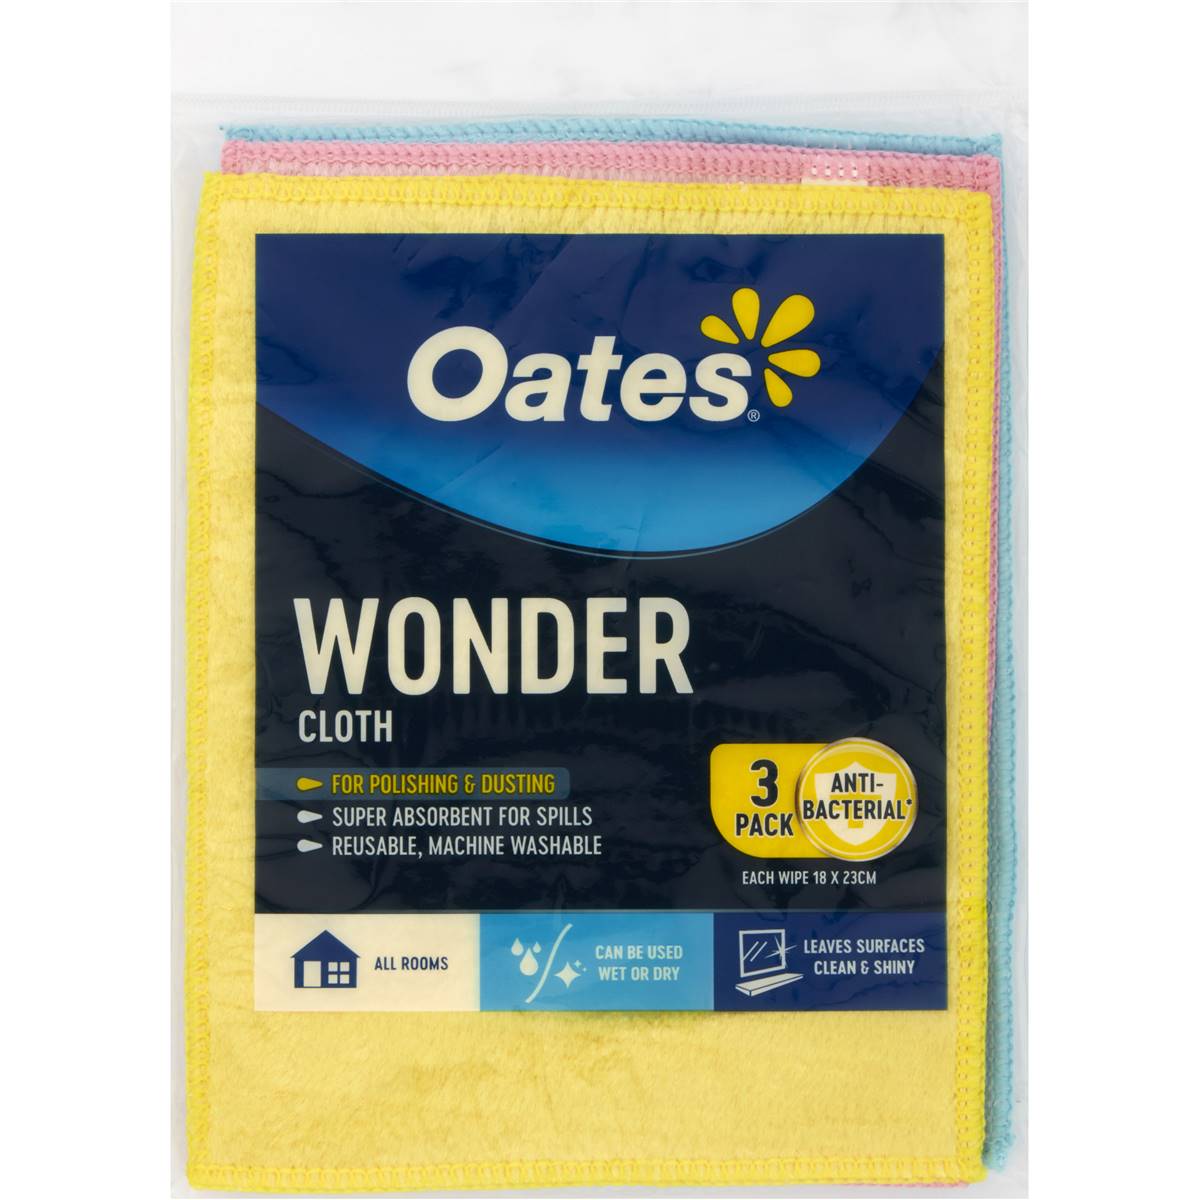 Oates Wonder Cloth 3 Pack